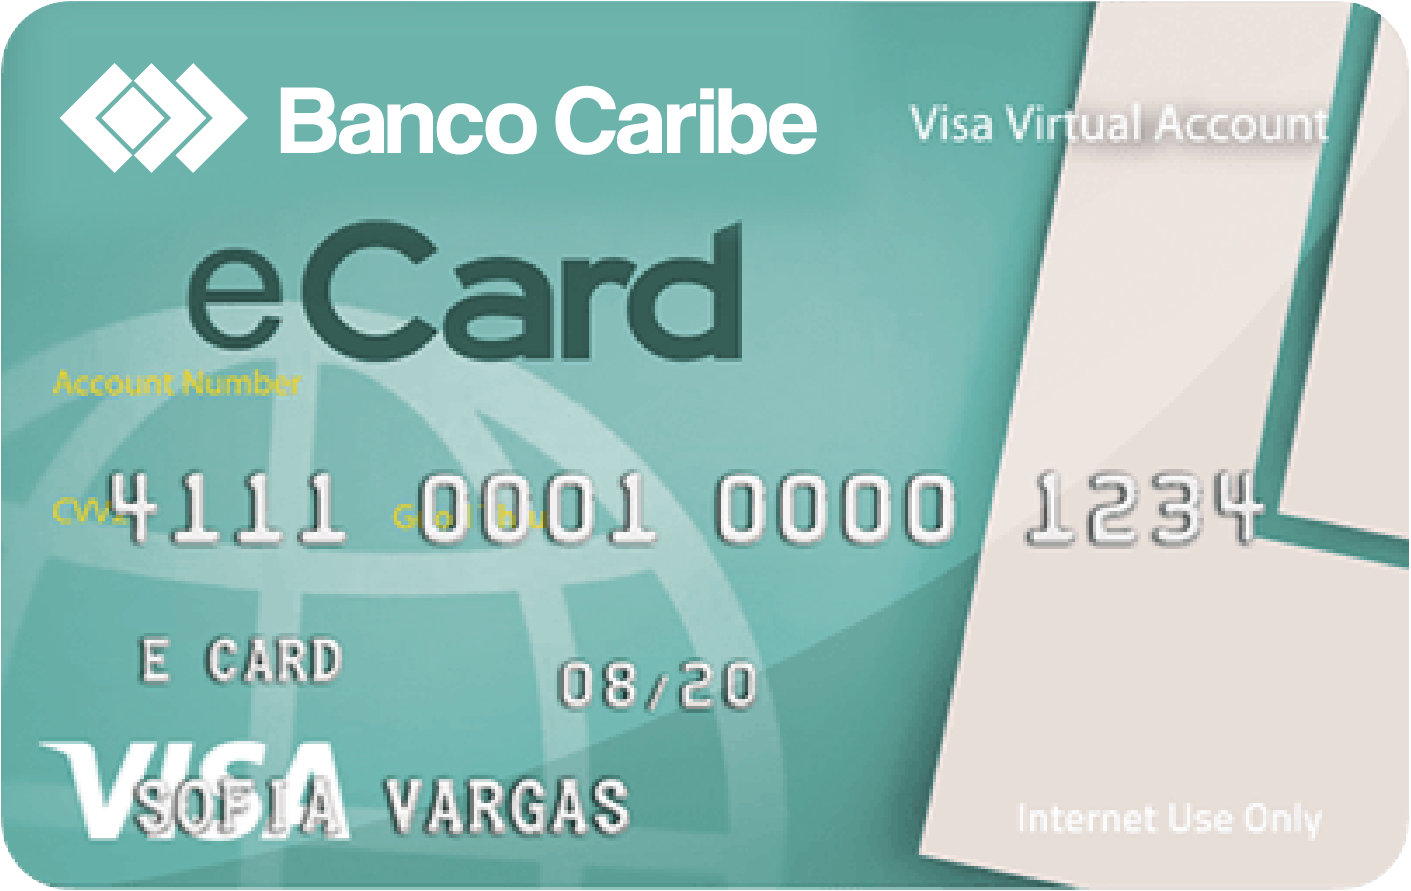 Imagen credit card